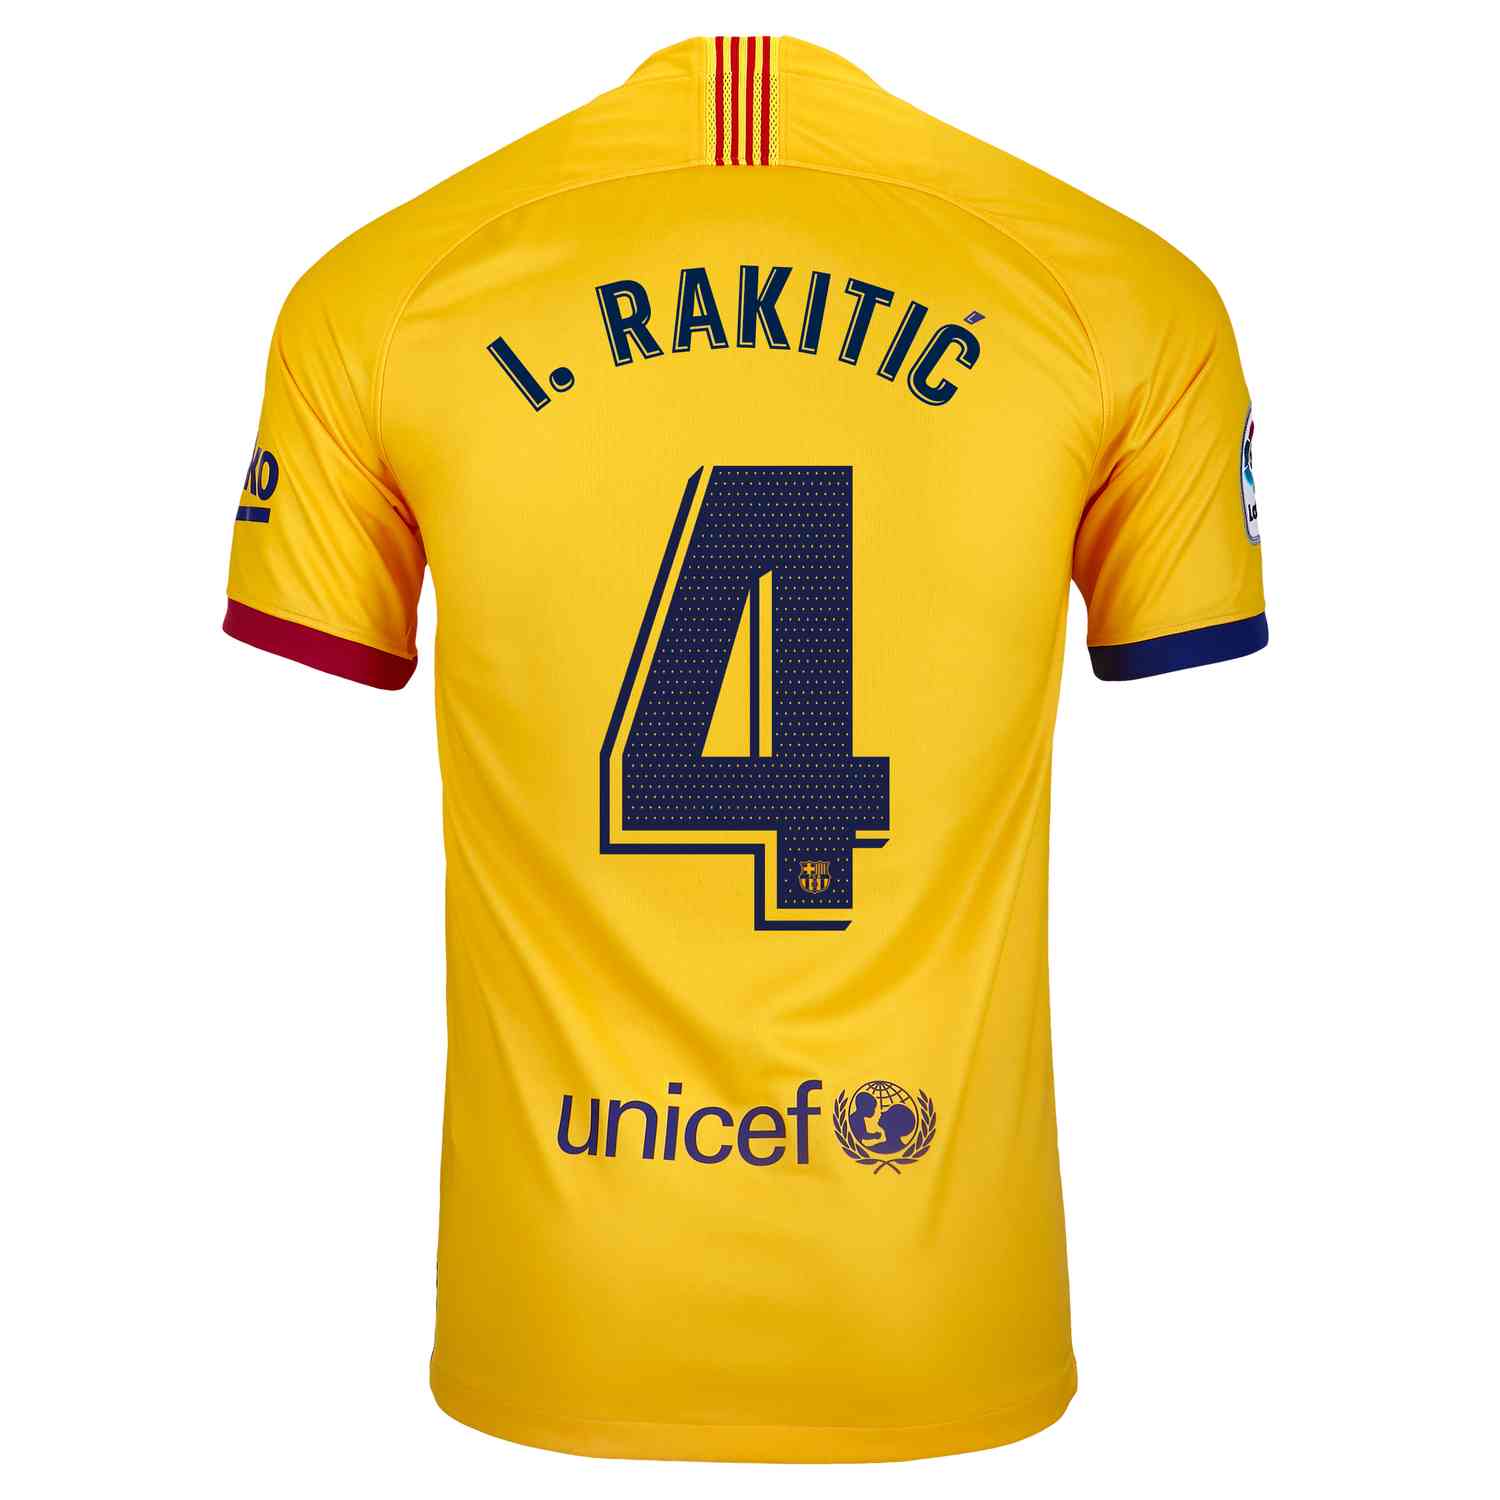 rakitic barcelona jersey number